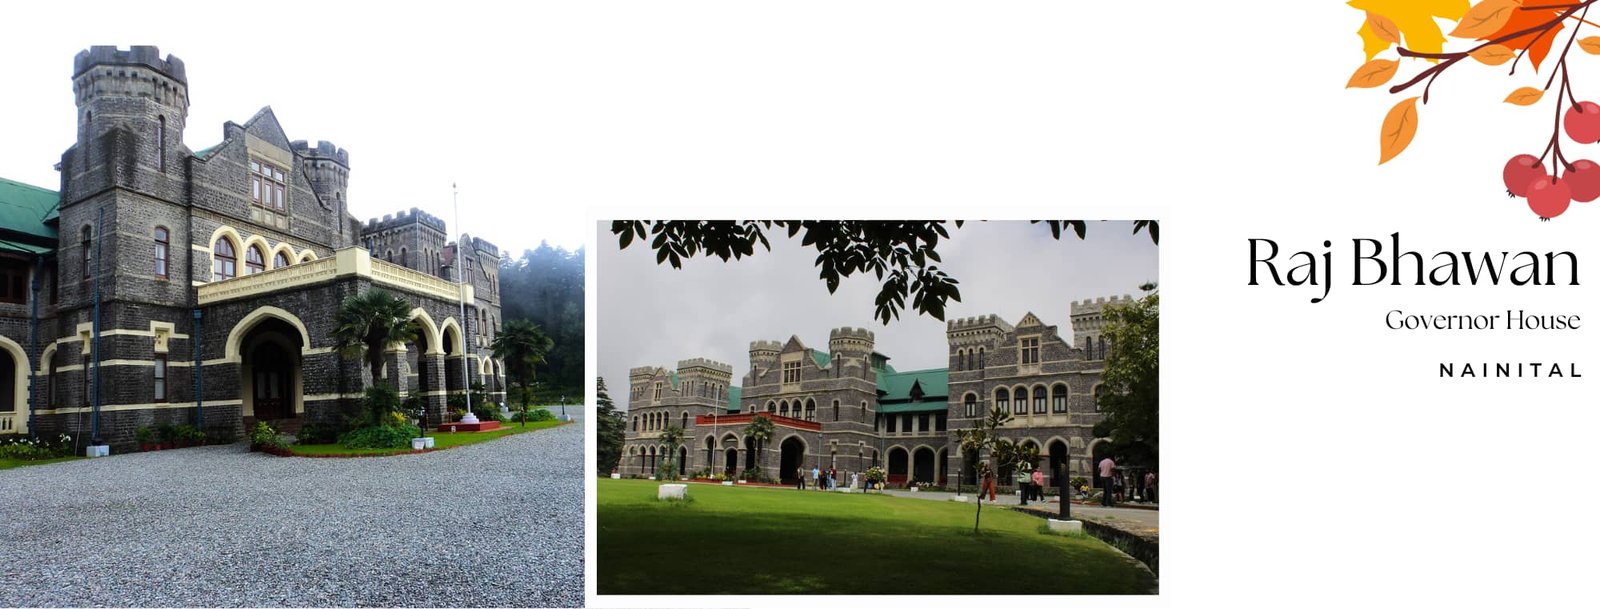 Raj Bhawan/ Governor's House of Uttarakhand nainital